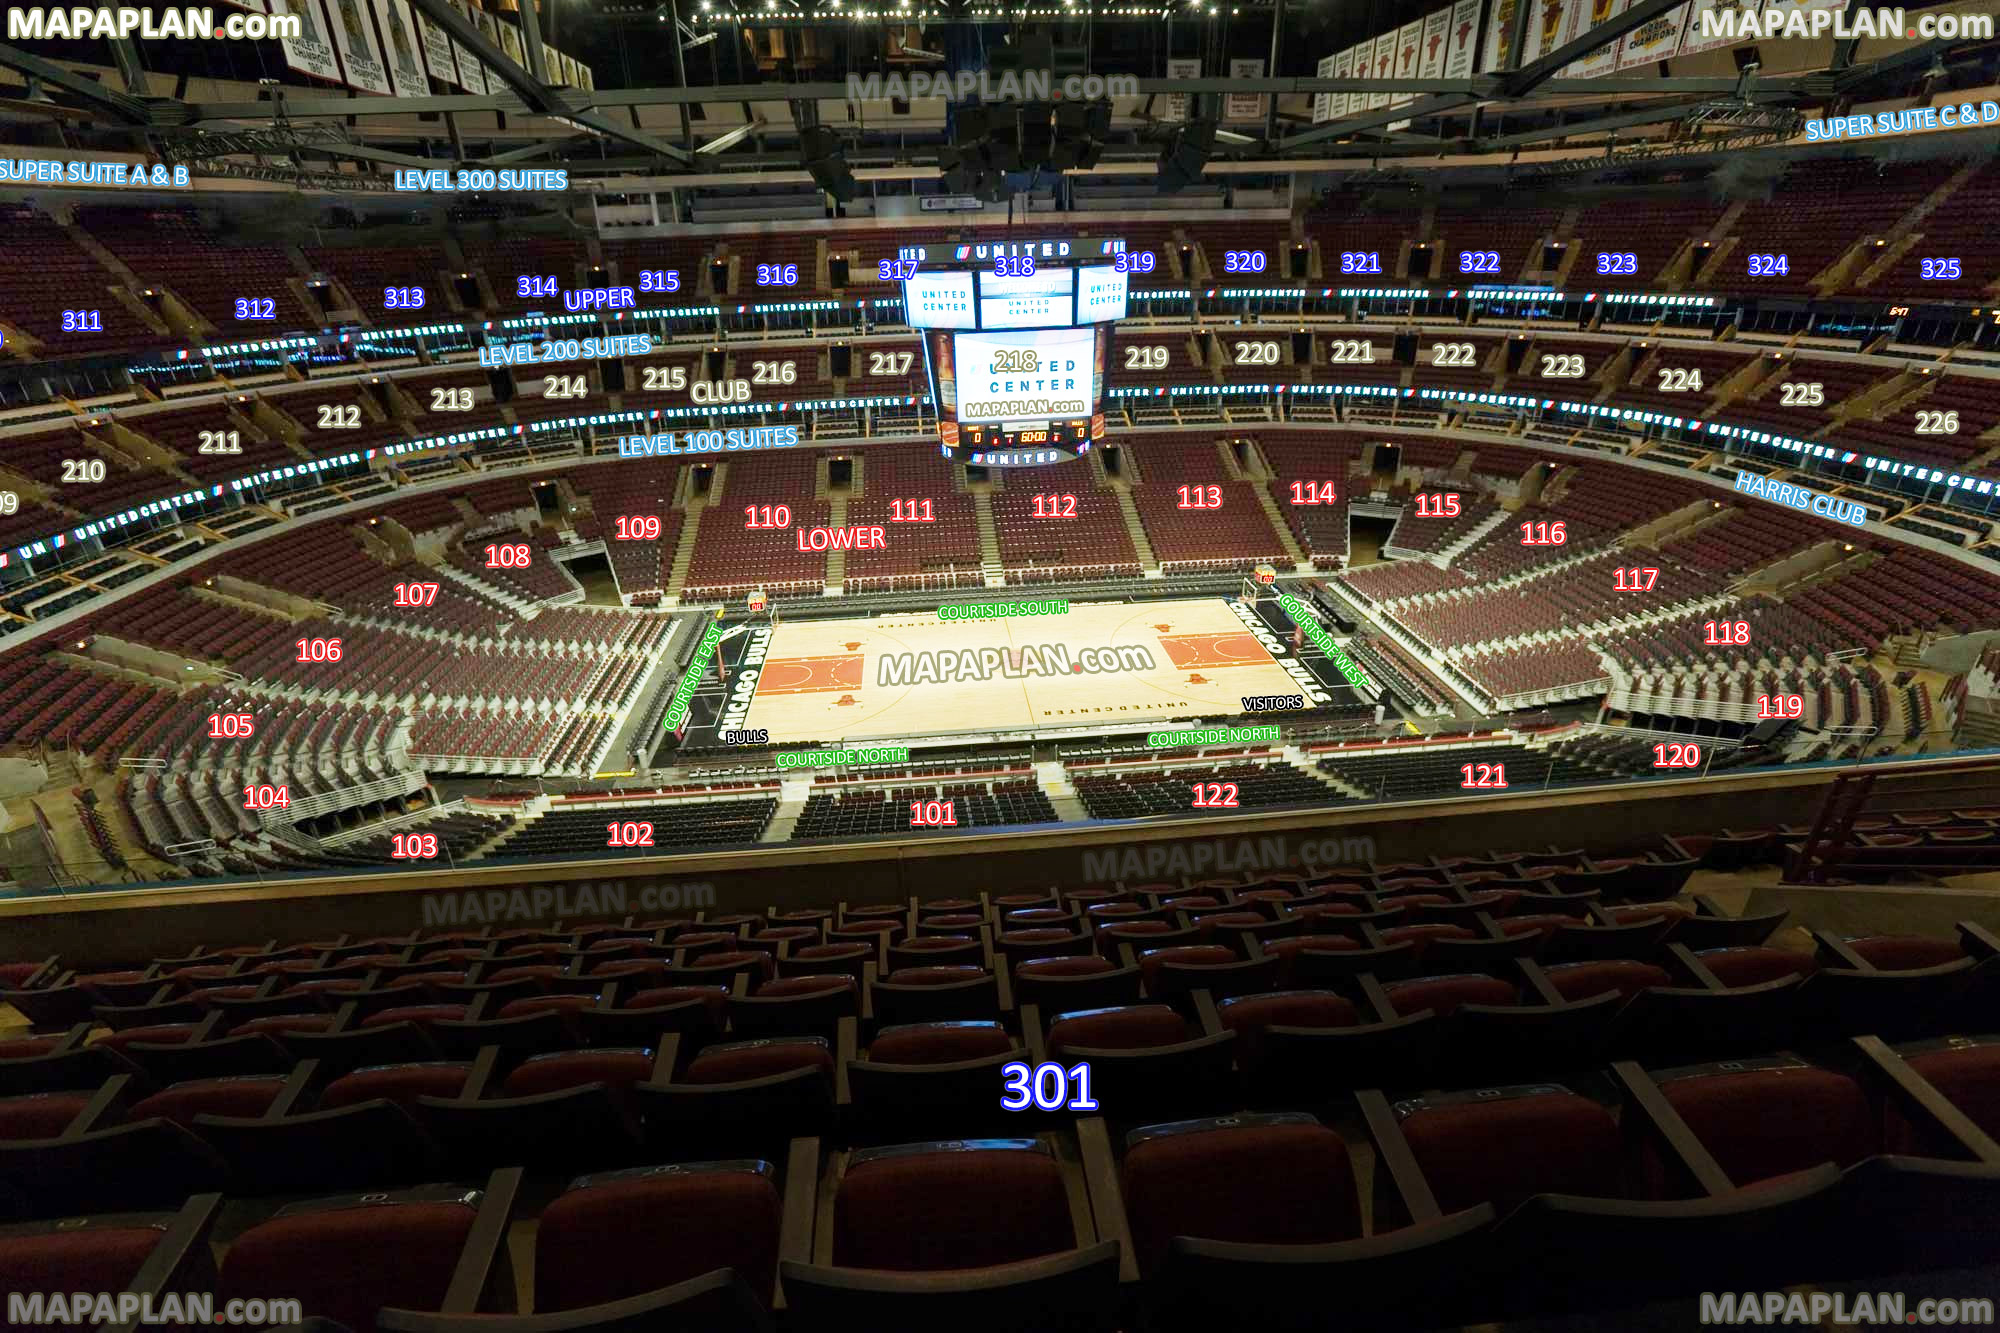 Chicago Bulls Arena Seating Chart